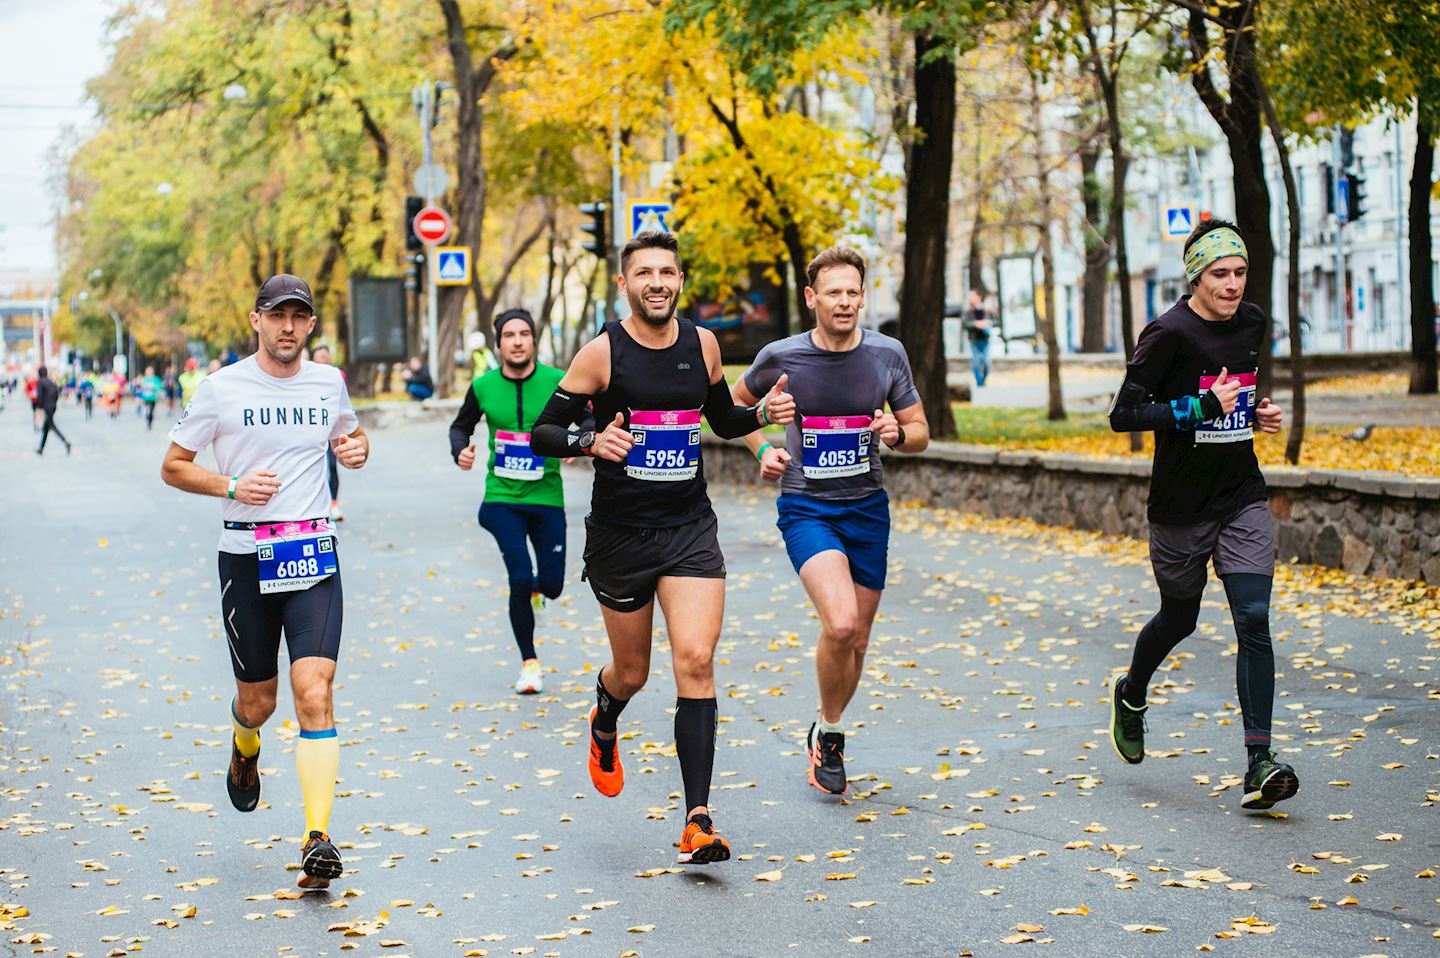 wizz air kyiv city marathon